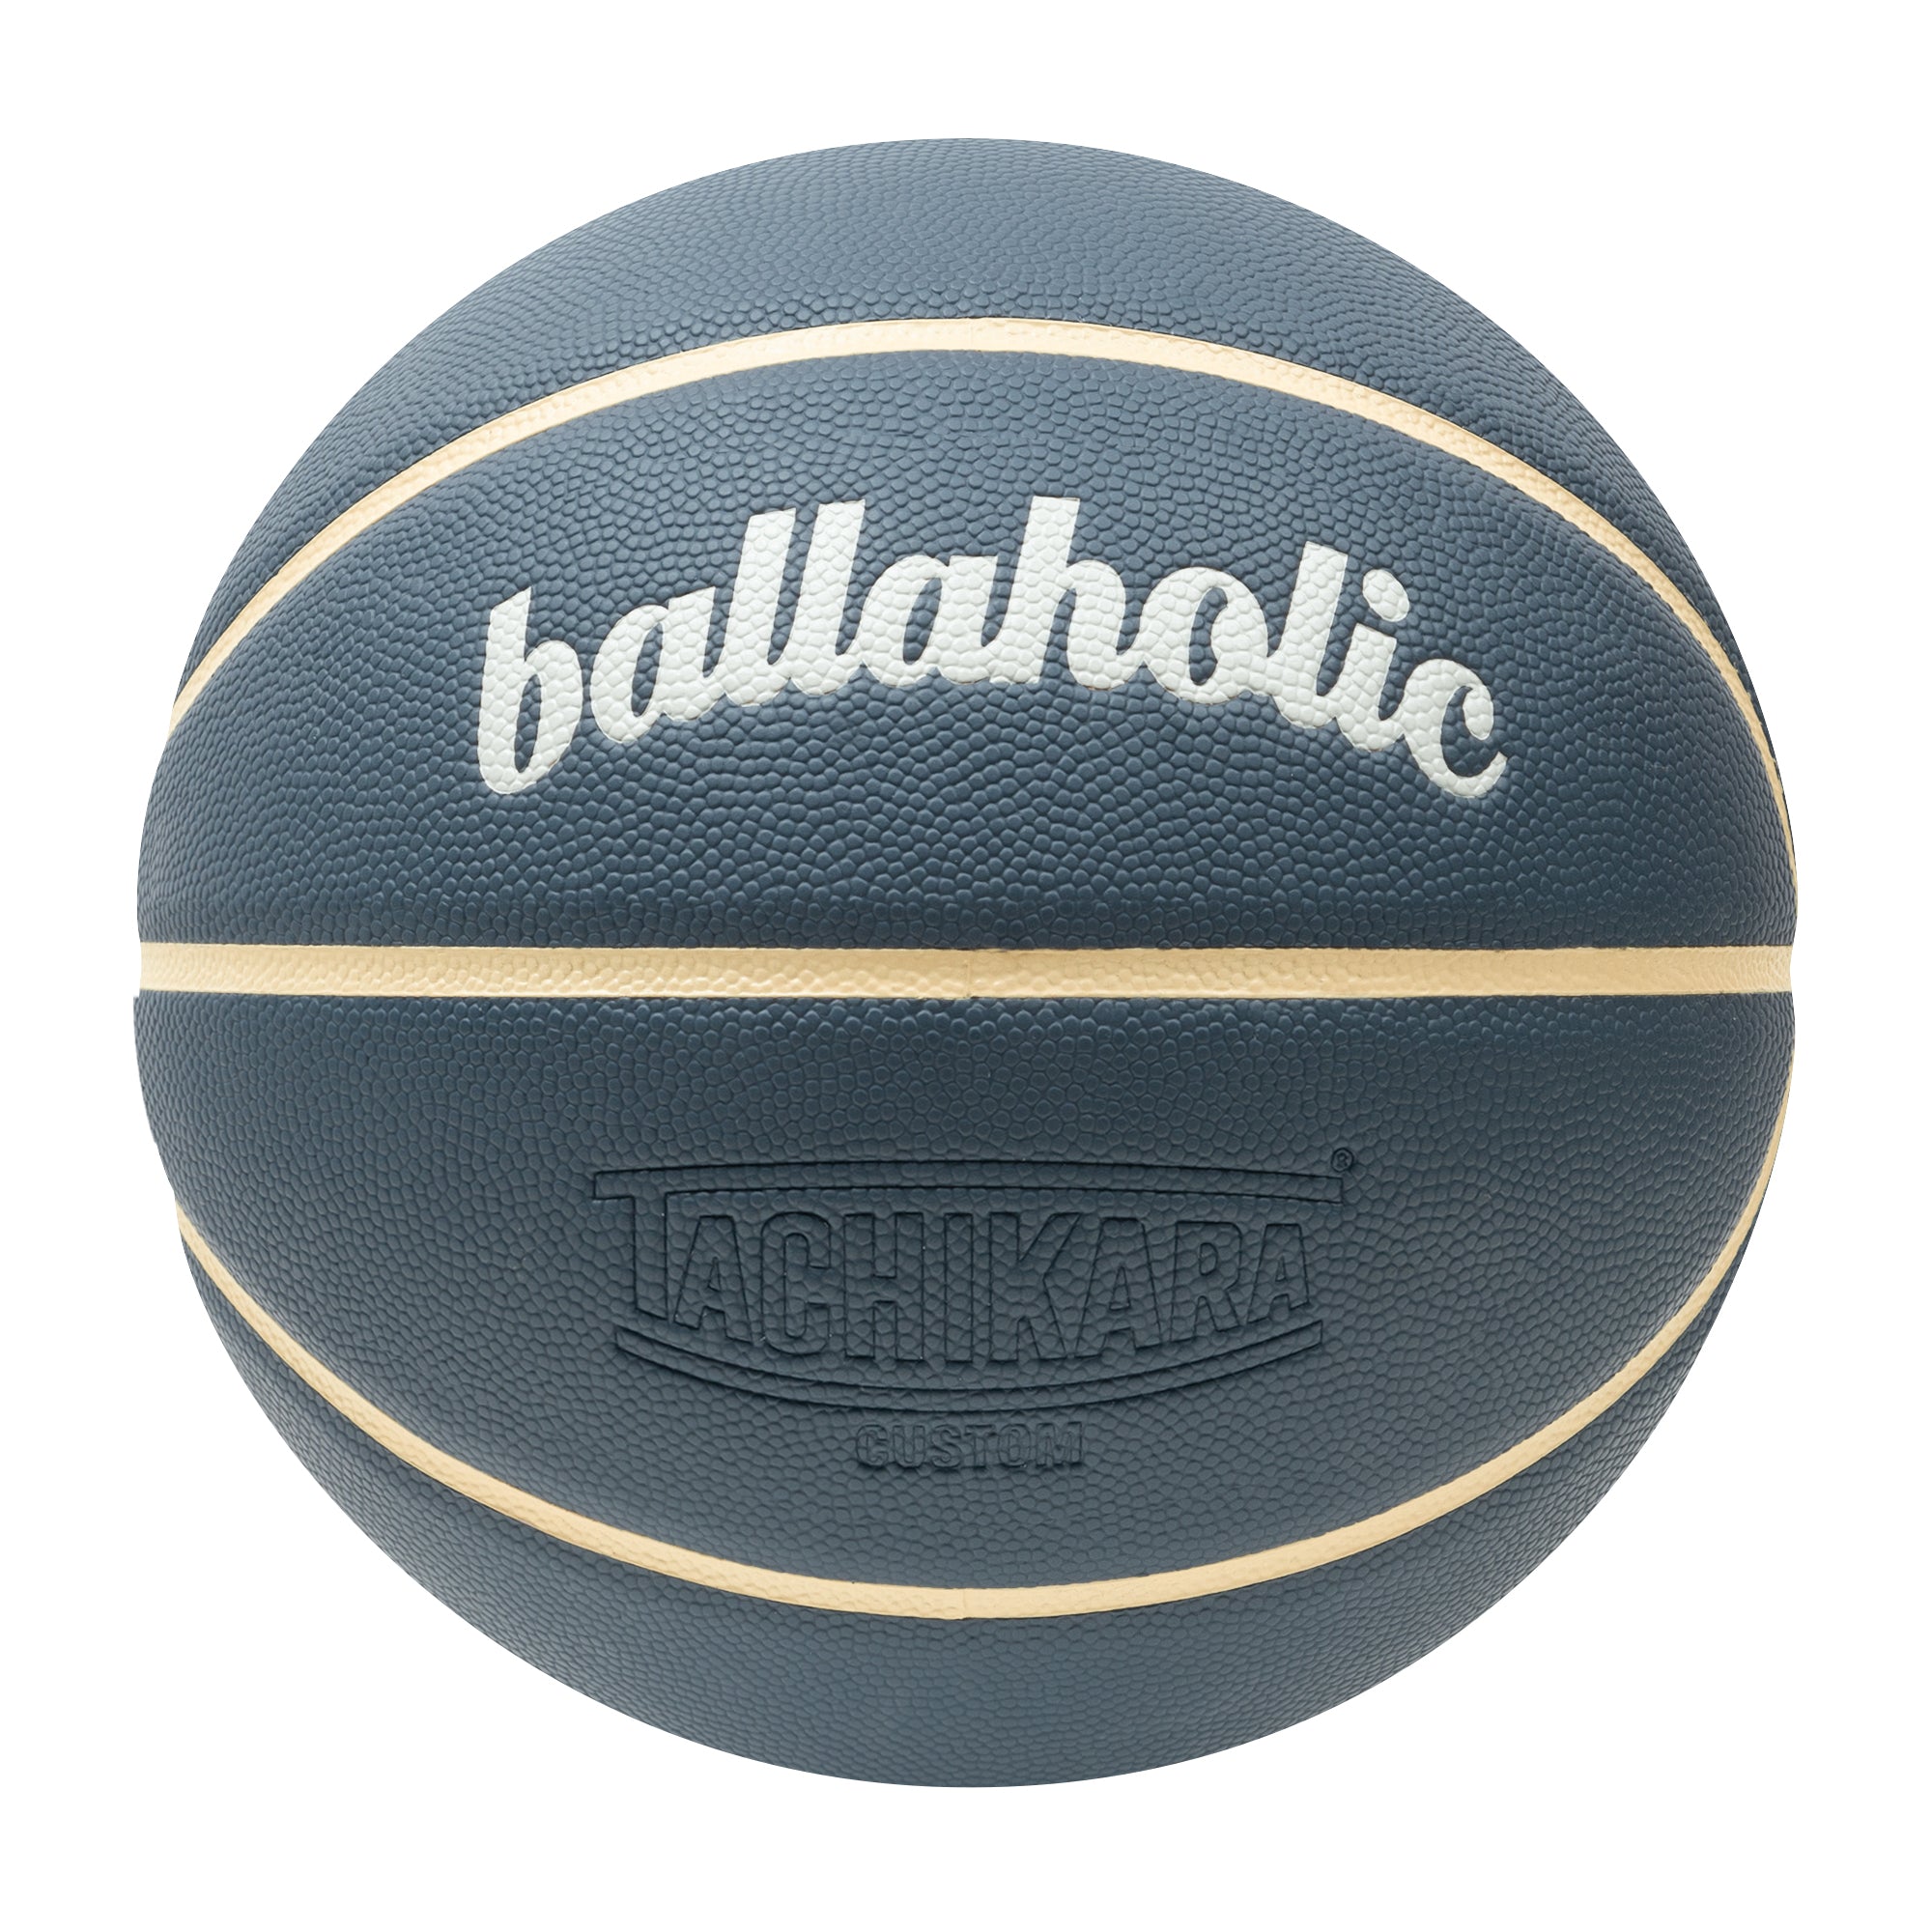 Playground Basketball / ballaholic x TACHIKARA (slate blue/cream beige)